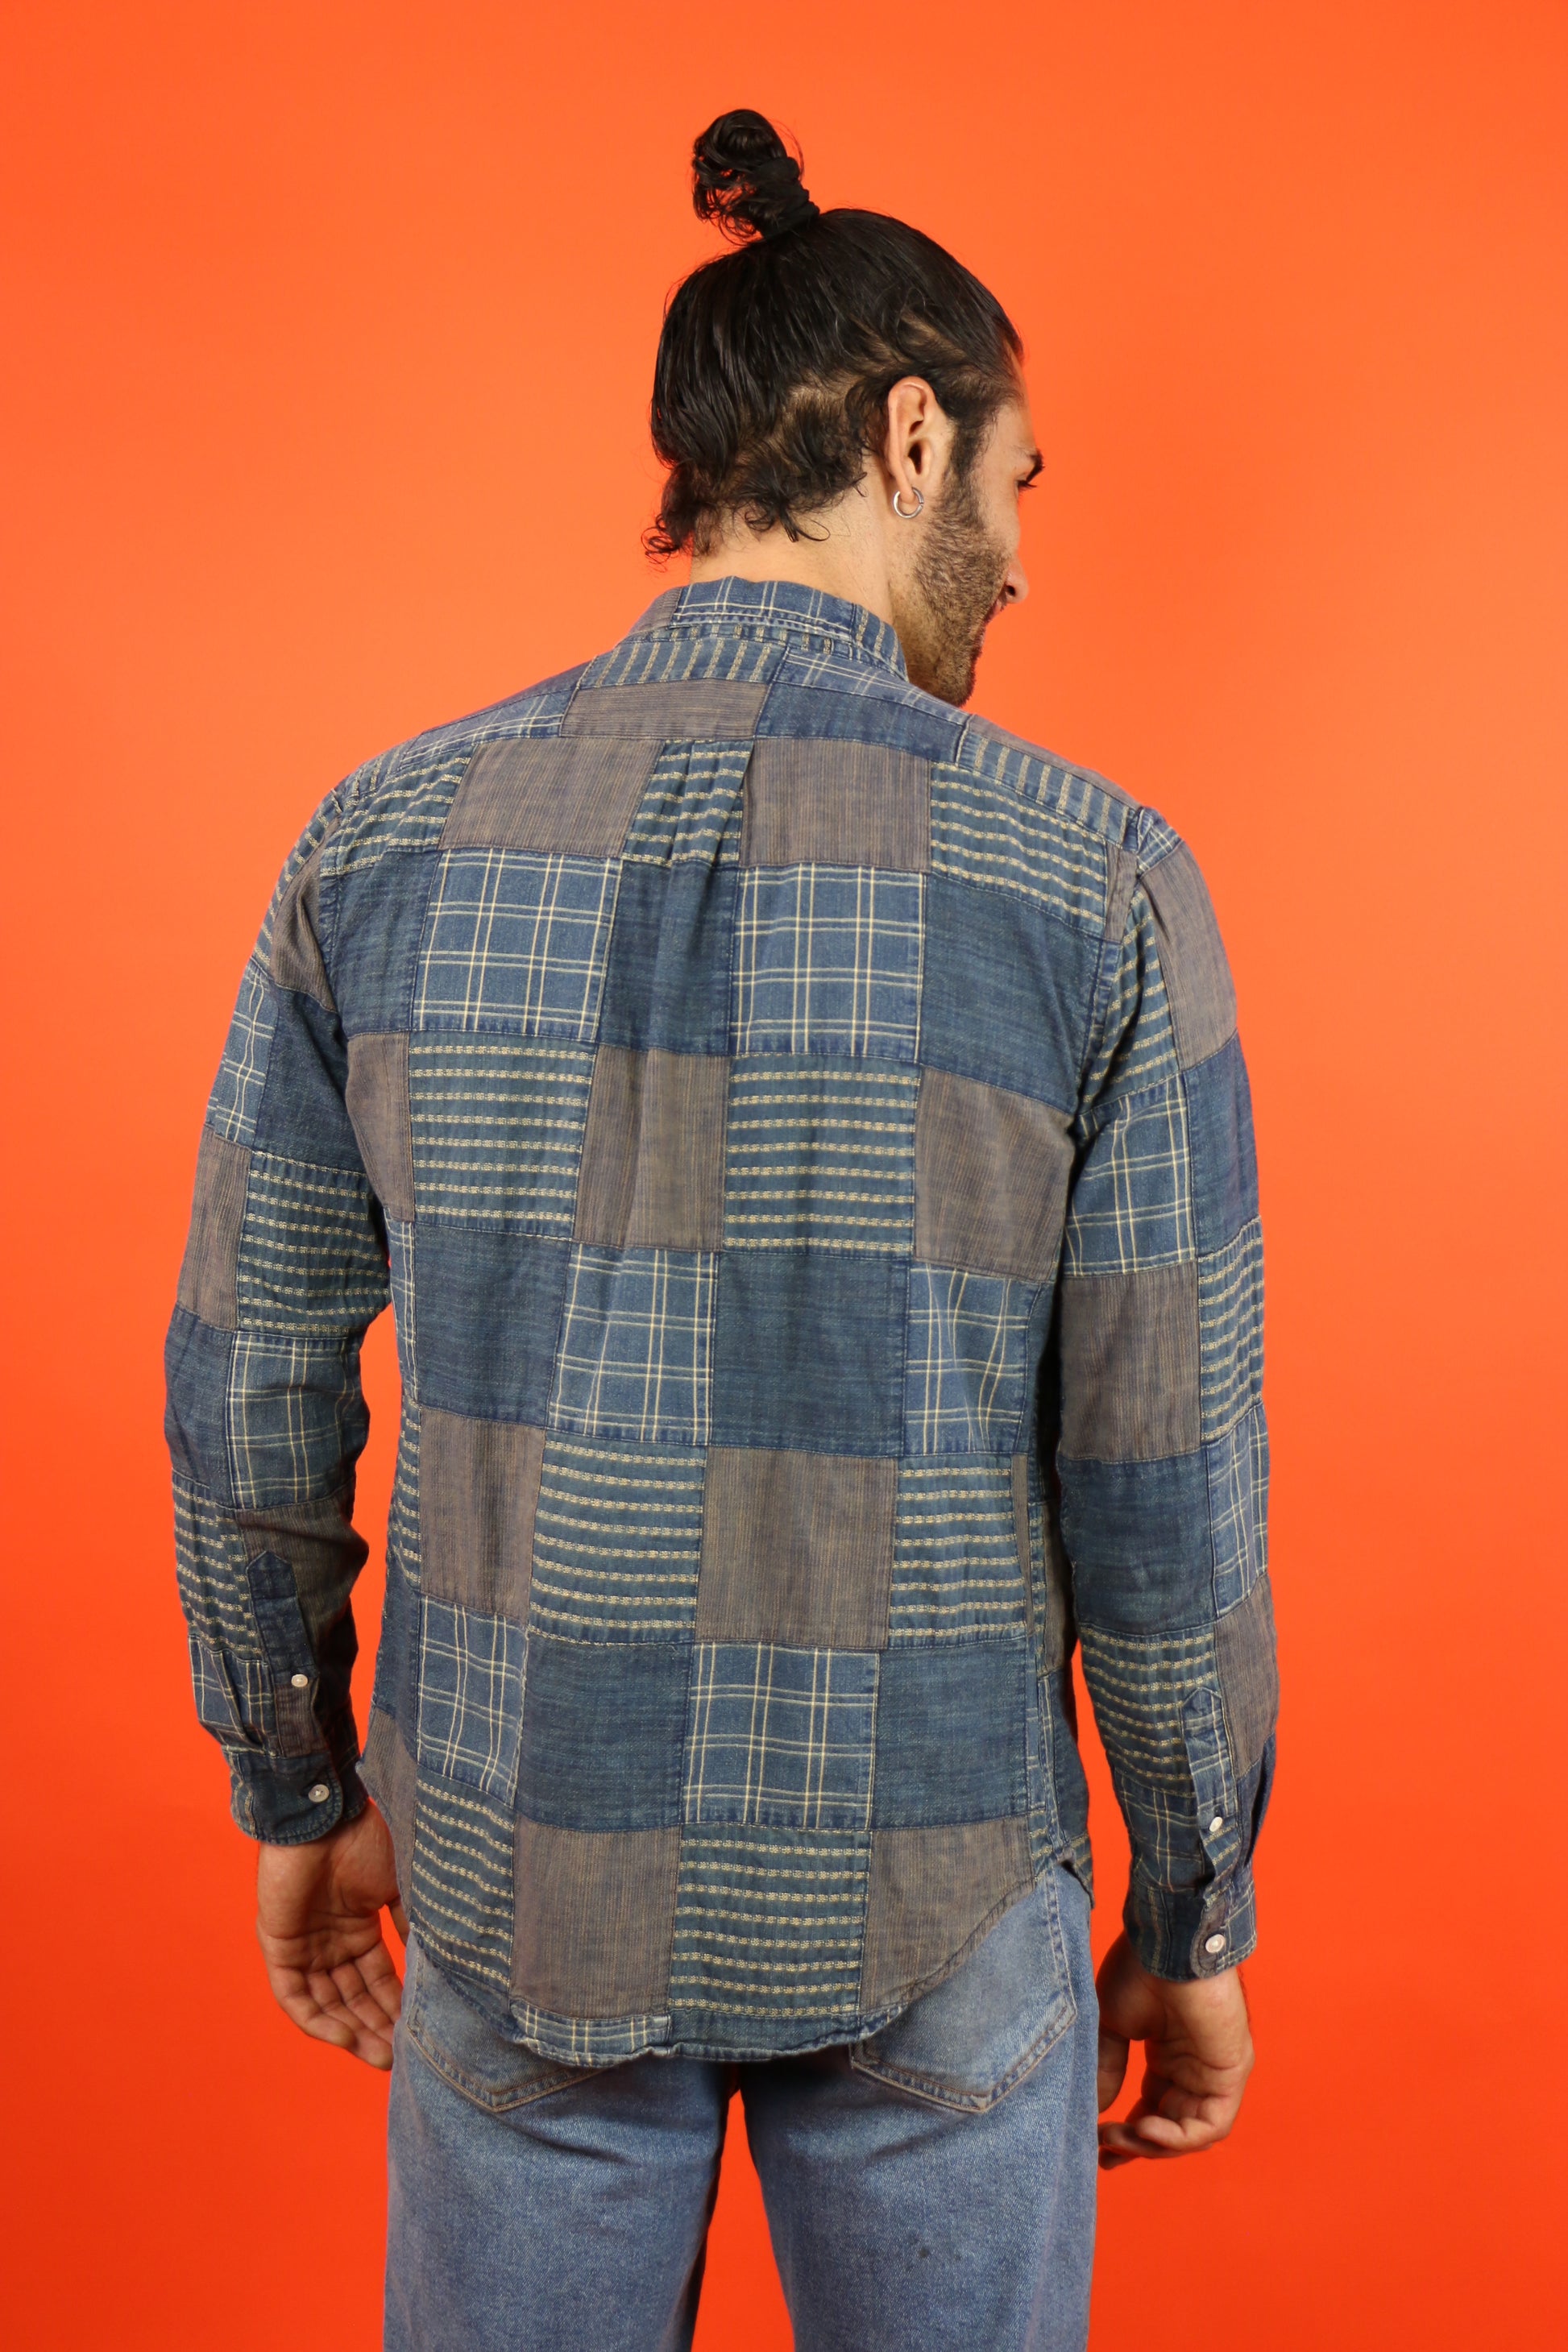 Levis Patchwork Shirt - vintage clothing clochard92.com